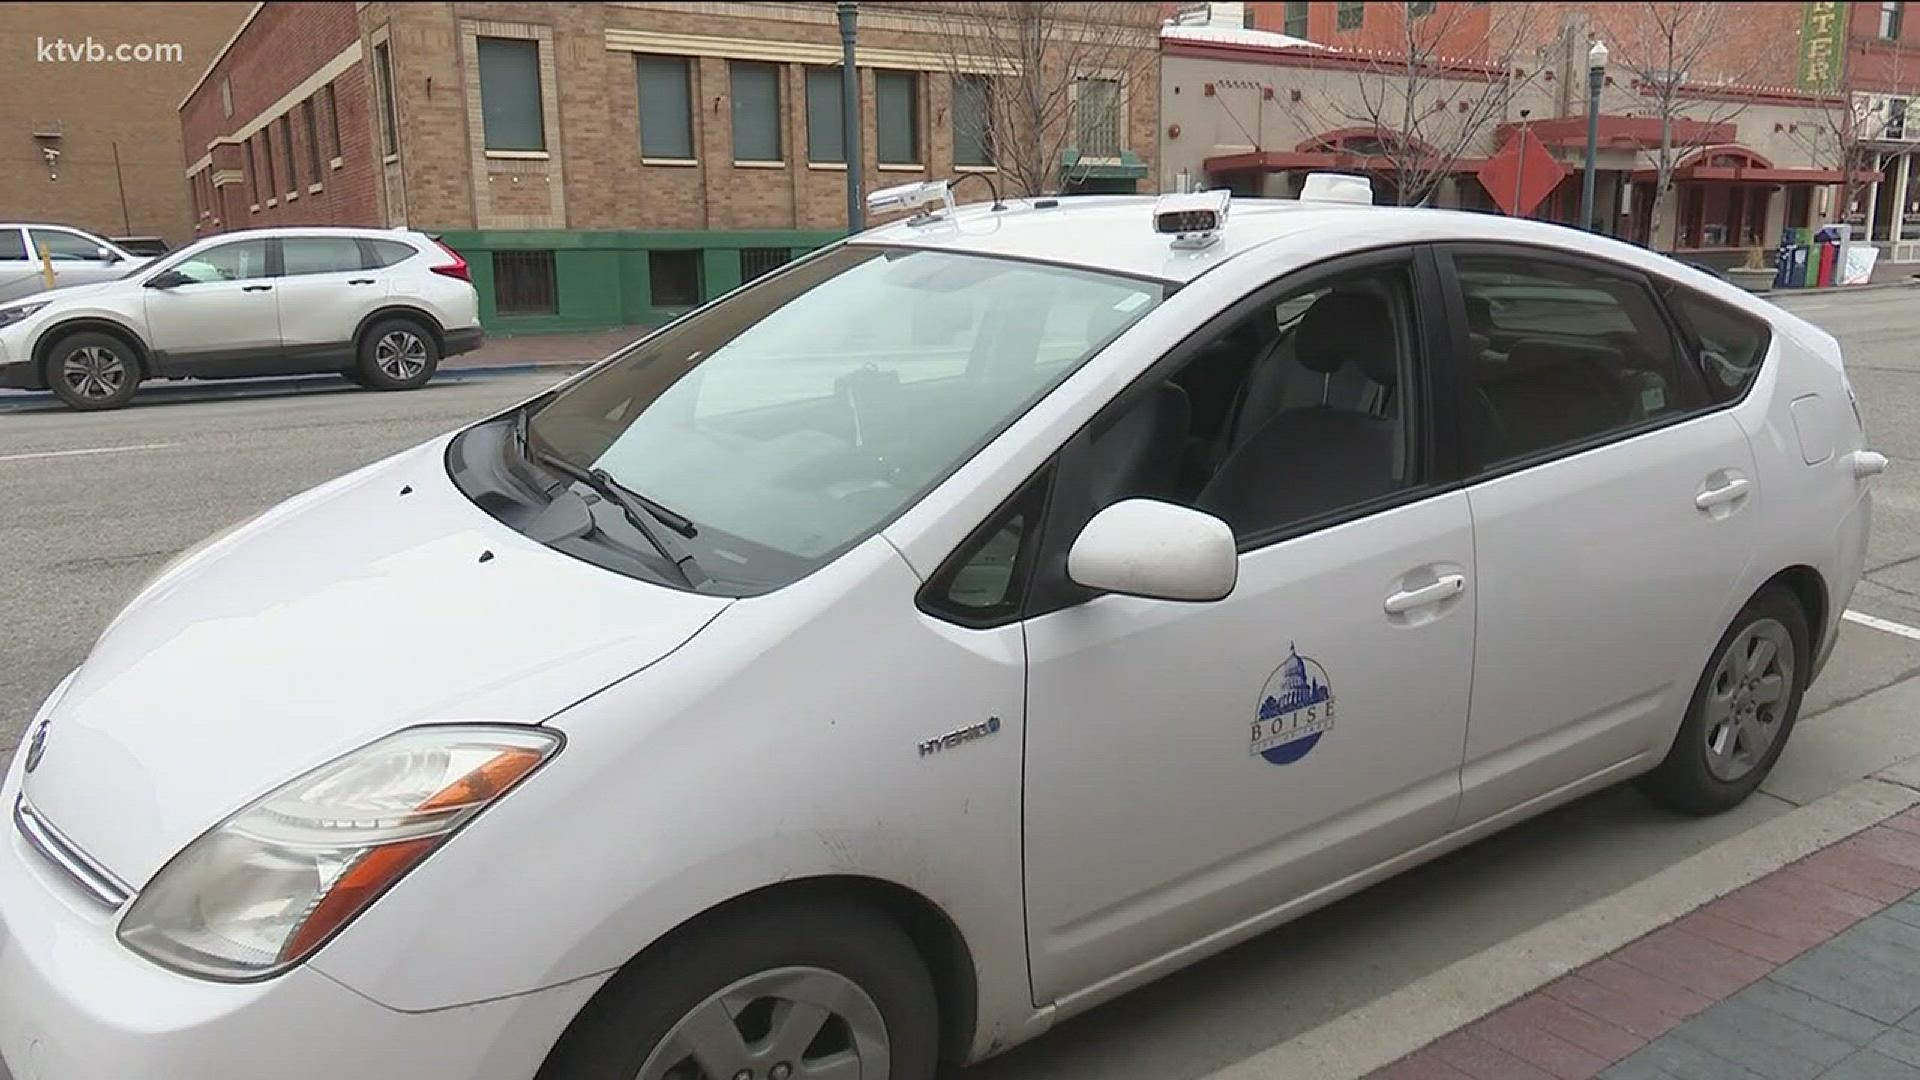 Camera car helps enforce parking in Boise.